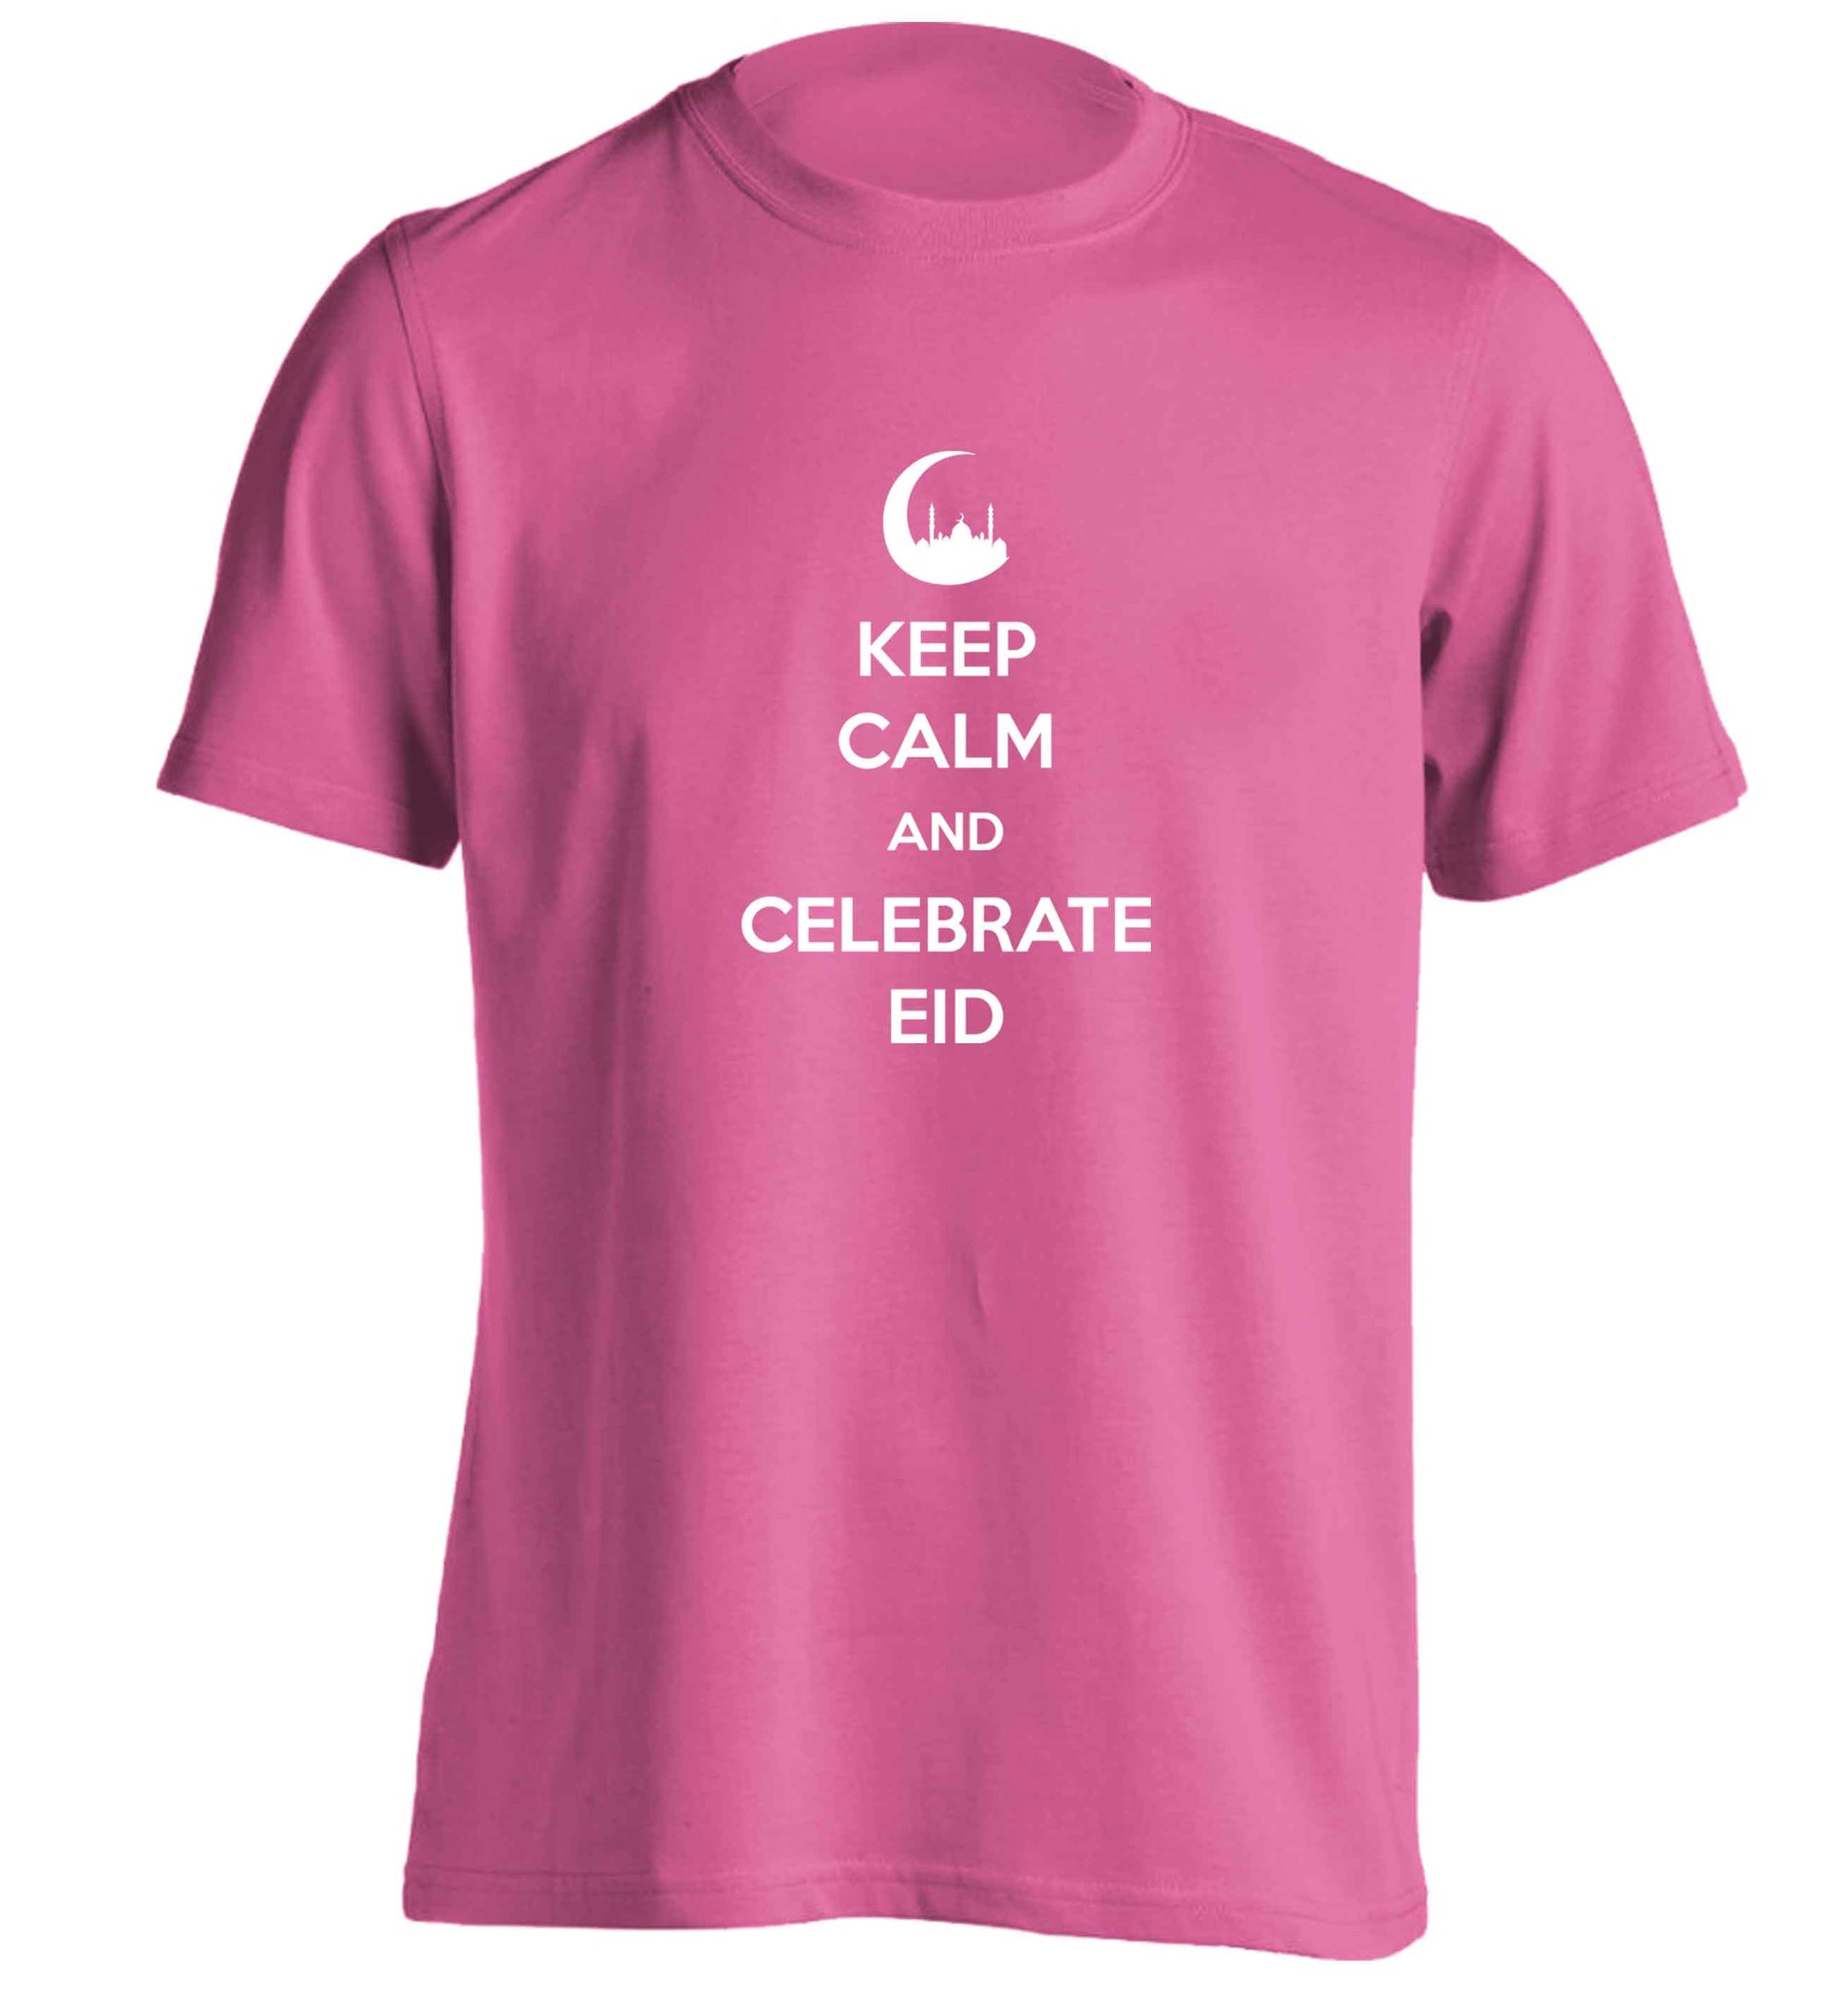 Keep calm and celebrate Eid adults unisex pink Tshirt 2XL